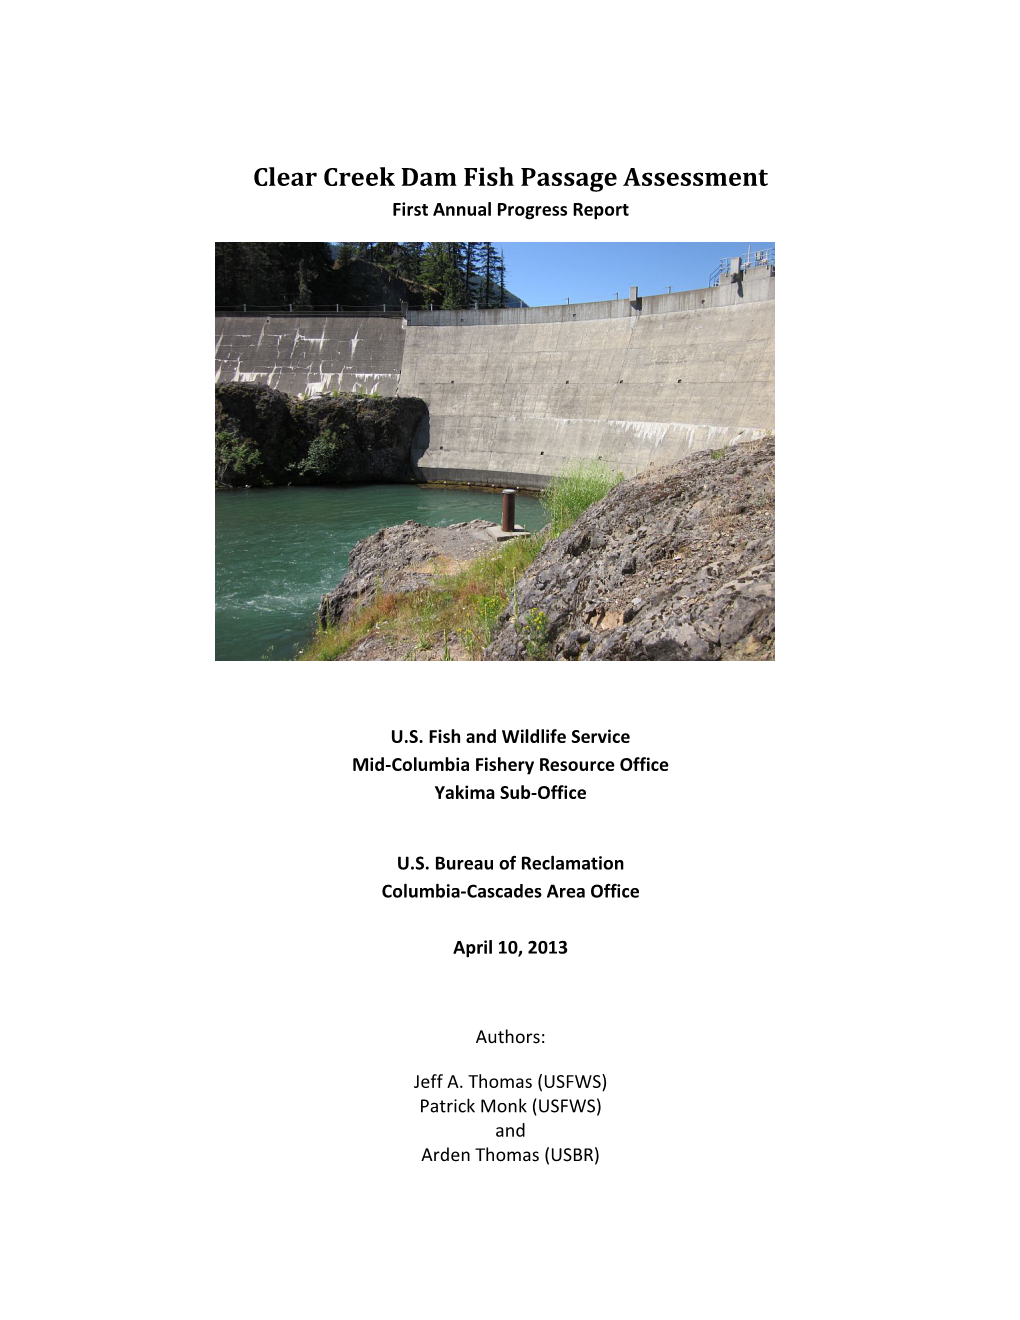 Clear Creek Dam Fish Passage Assessment First Annual Progress Report